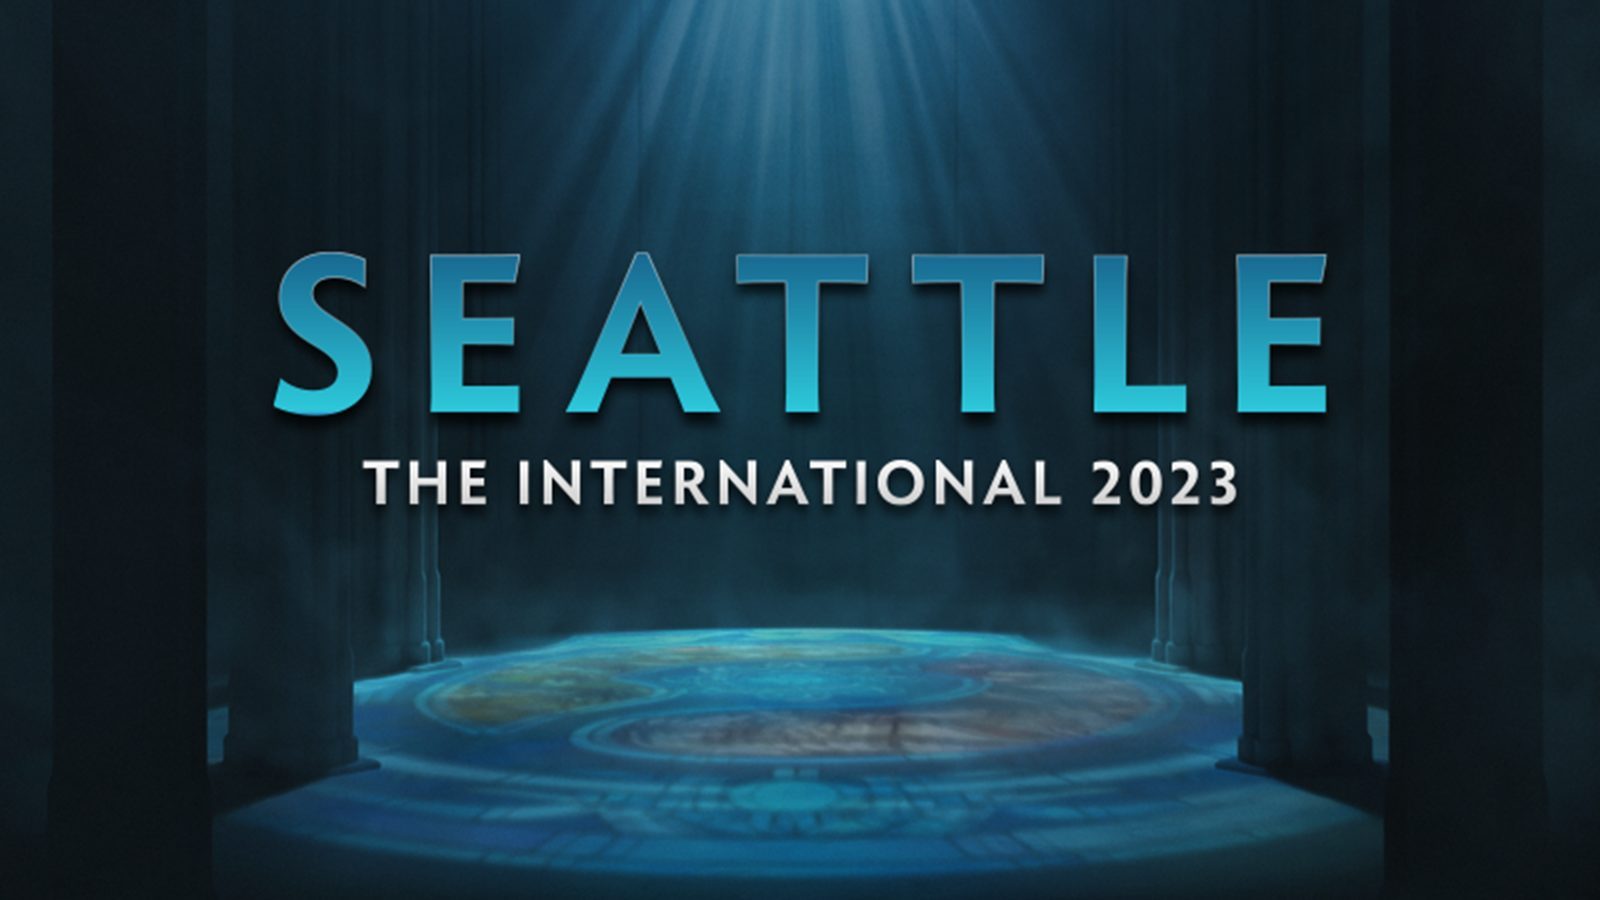 The International 2023 - Dota 2 Returns to Seattle